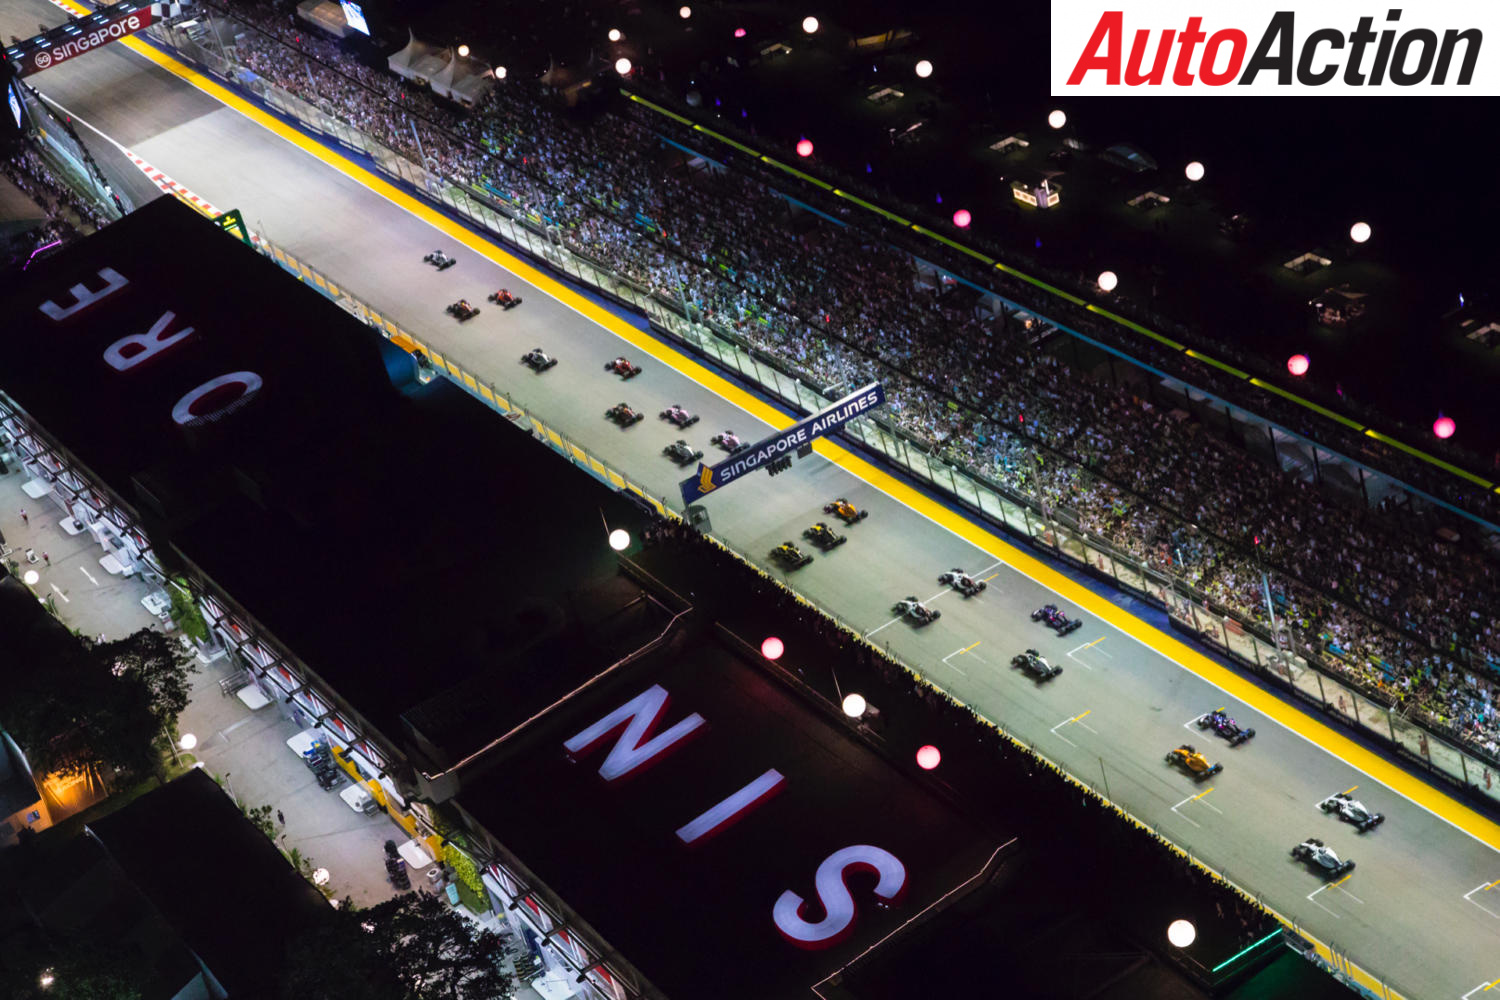 Singapore Grand Prix cancelled - Image: Motorsport Images